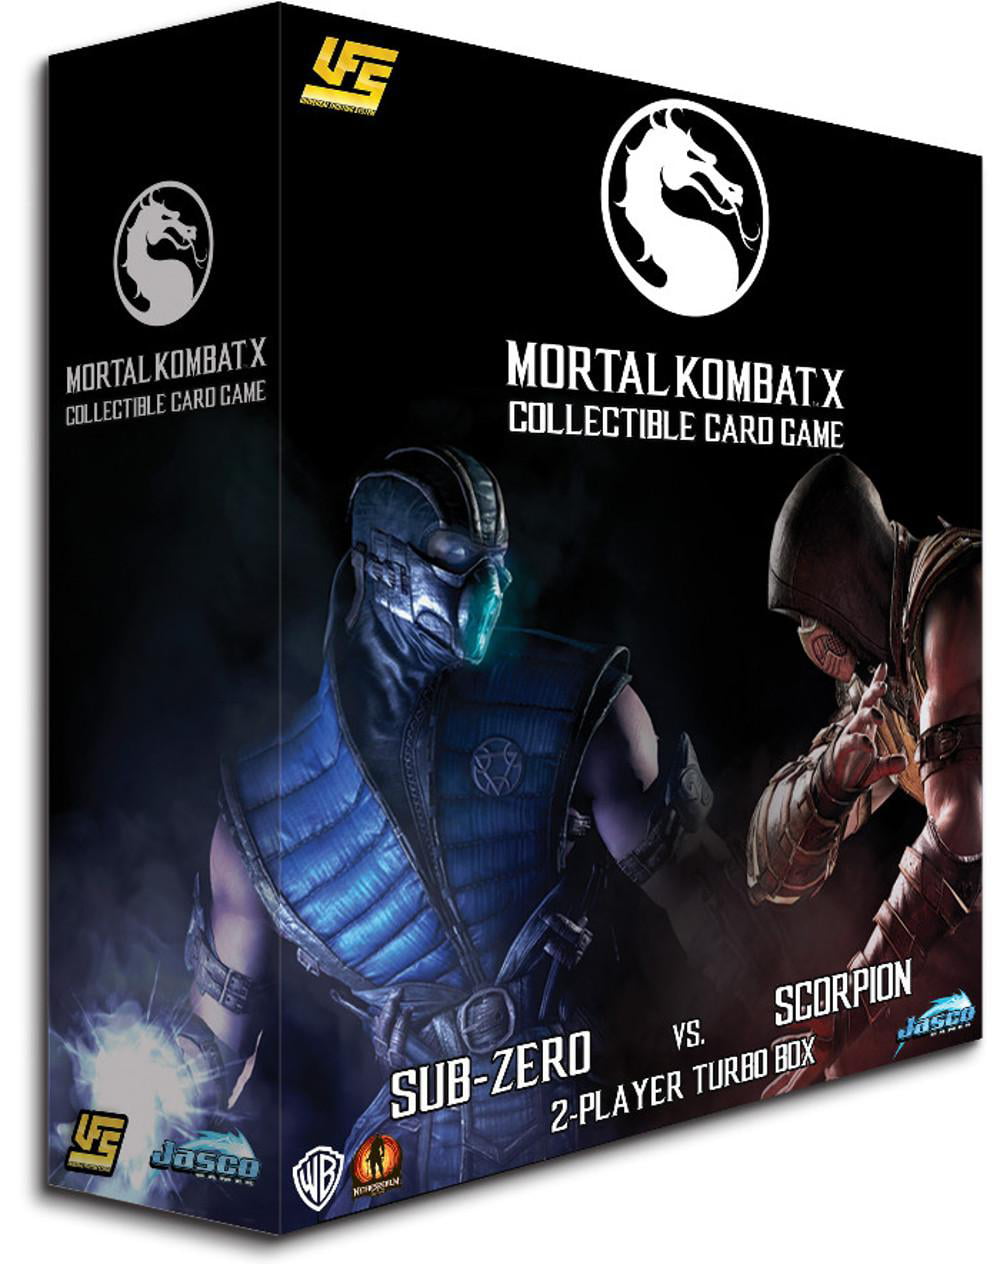 Mortal Kombat II CPO 2 player - GameOnGrafix